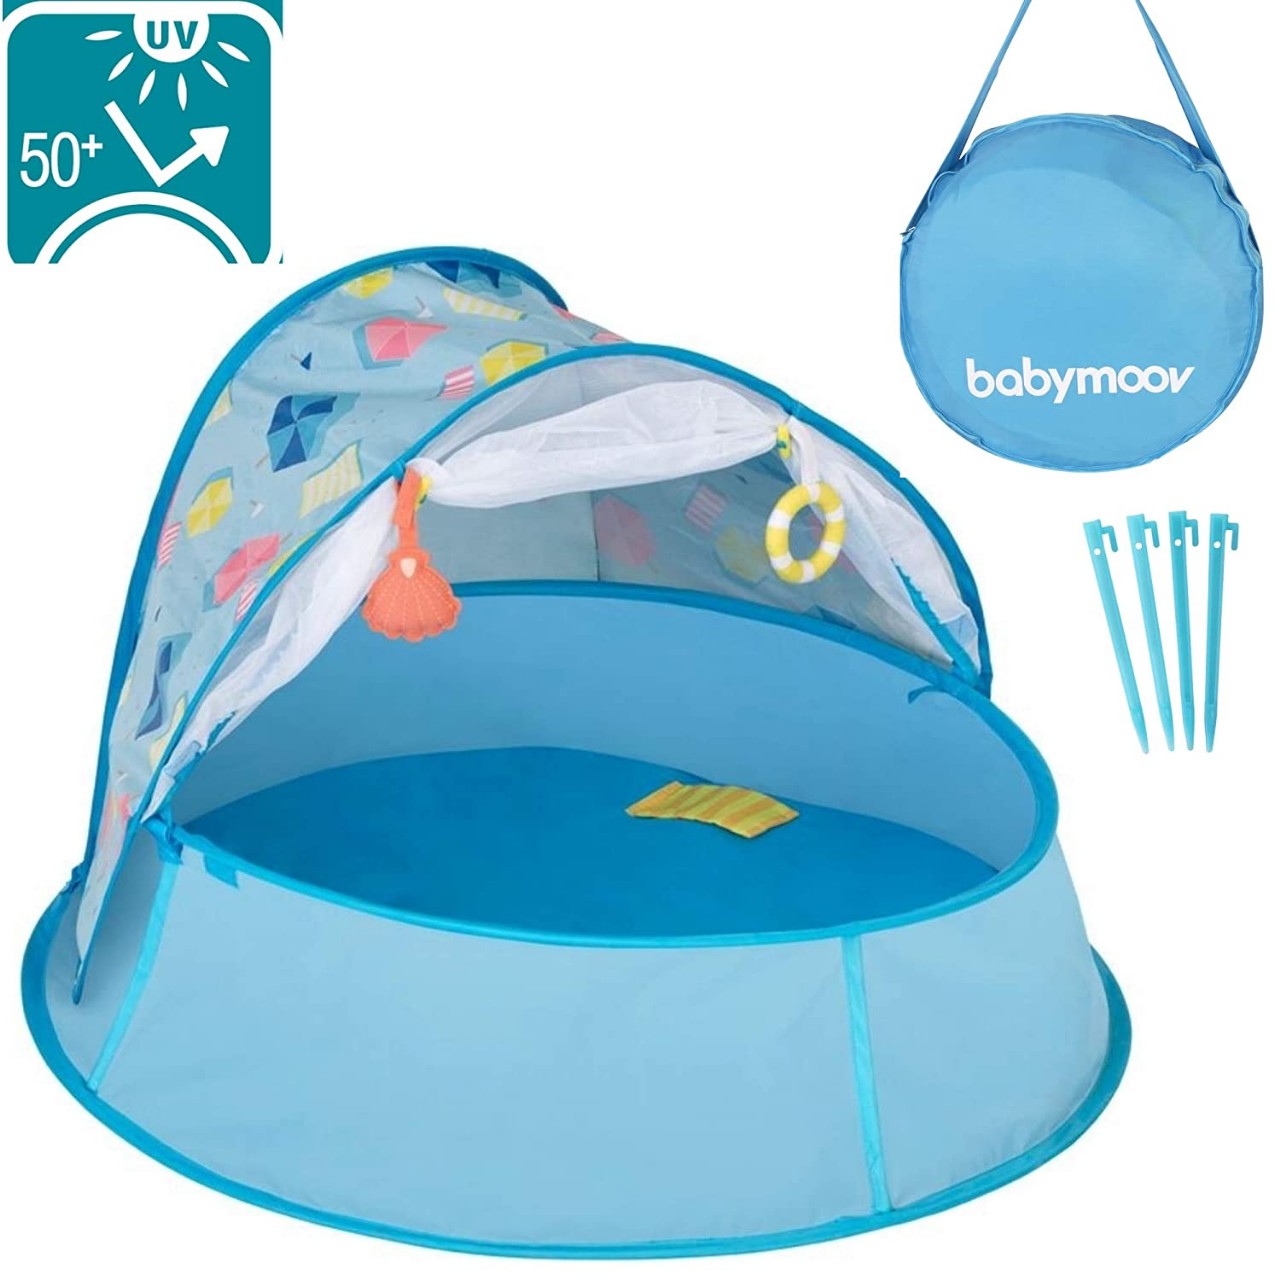 Babymoov Aquani Tent & Pool | 3 in 1 Pop Up Tent, Kiddie Pool and Play Yard